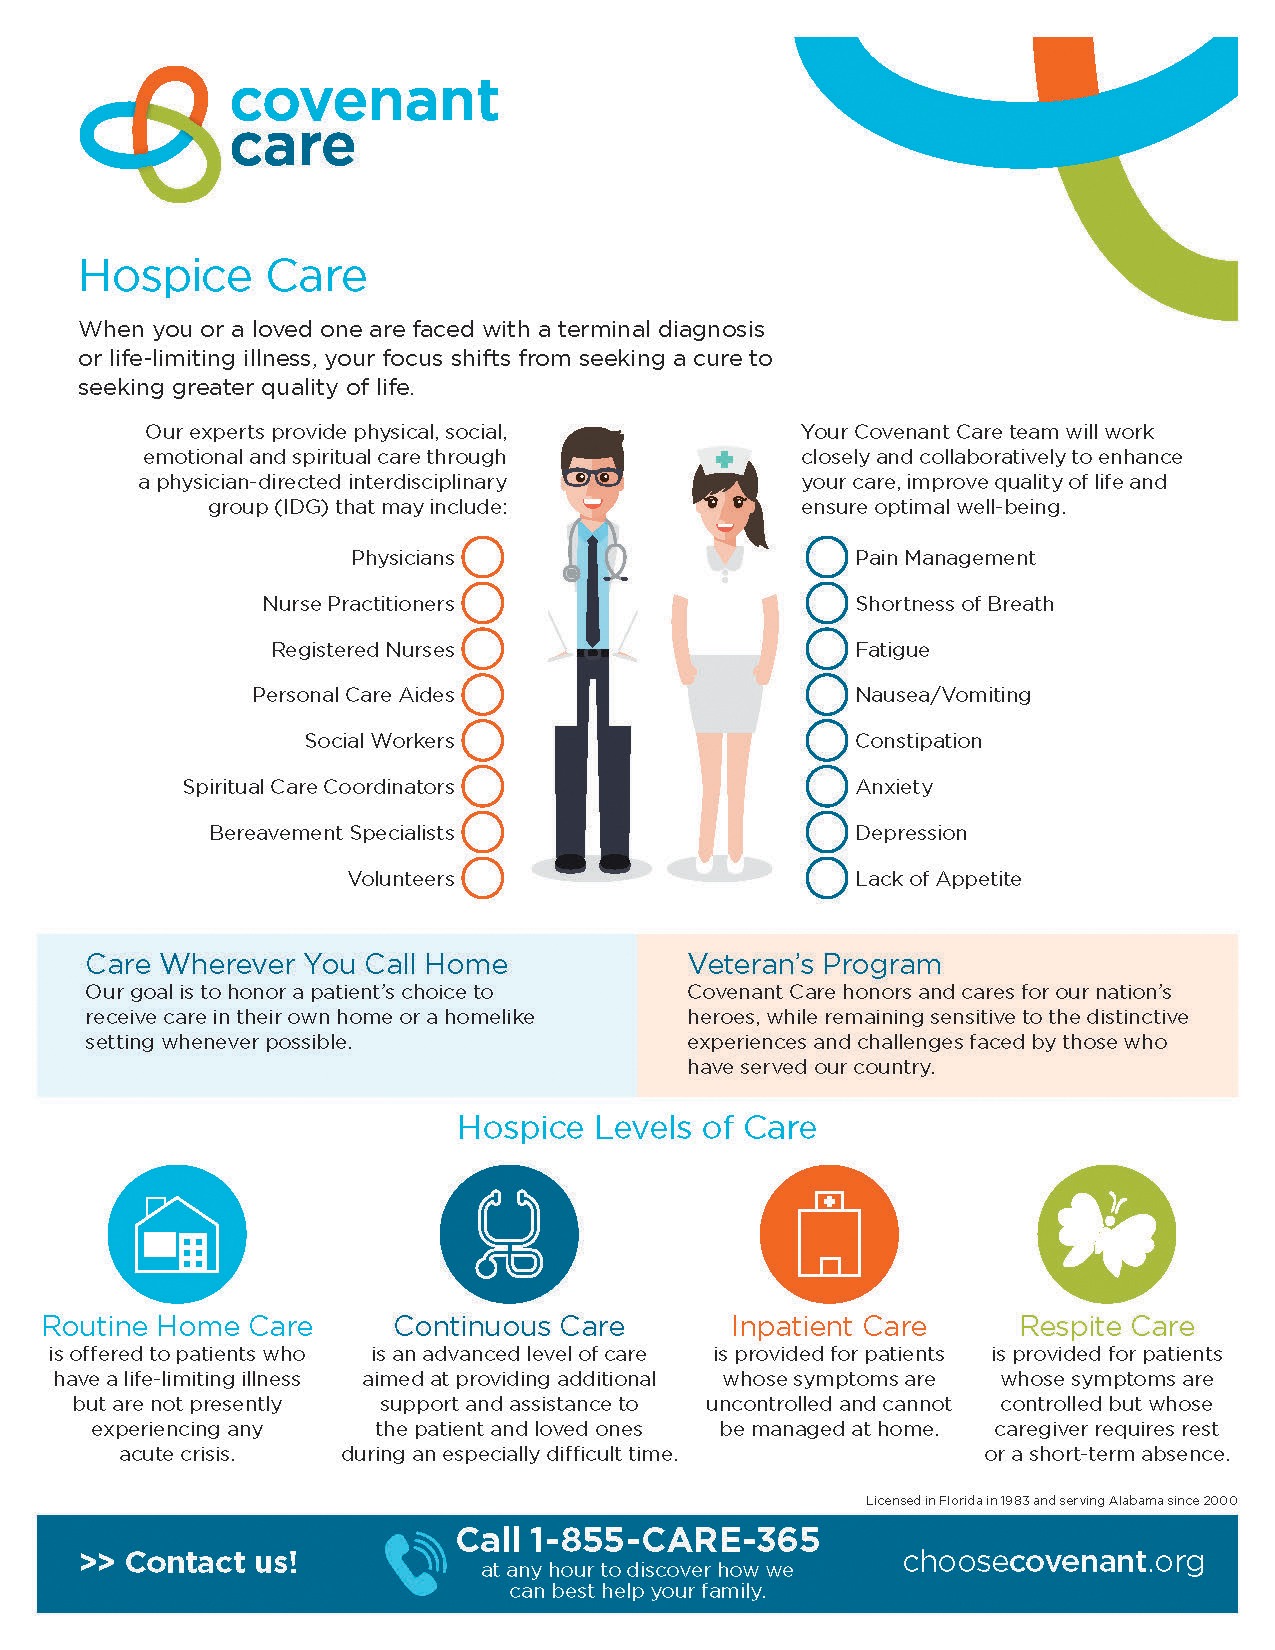 Covenant Care Hospice Pensacola FL Hospice Care